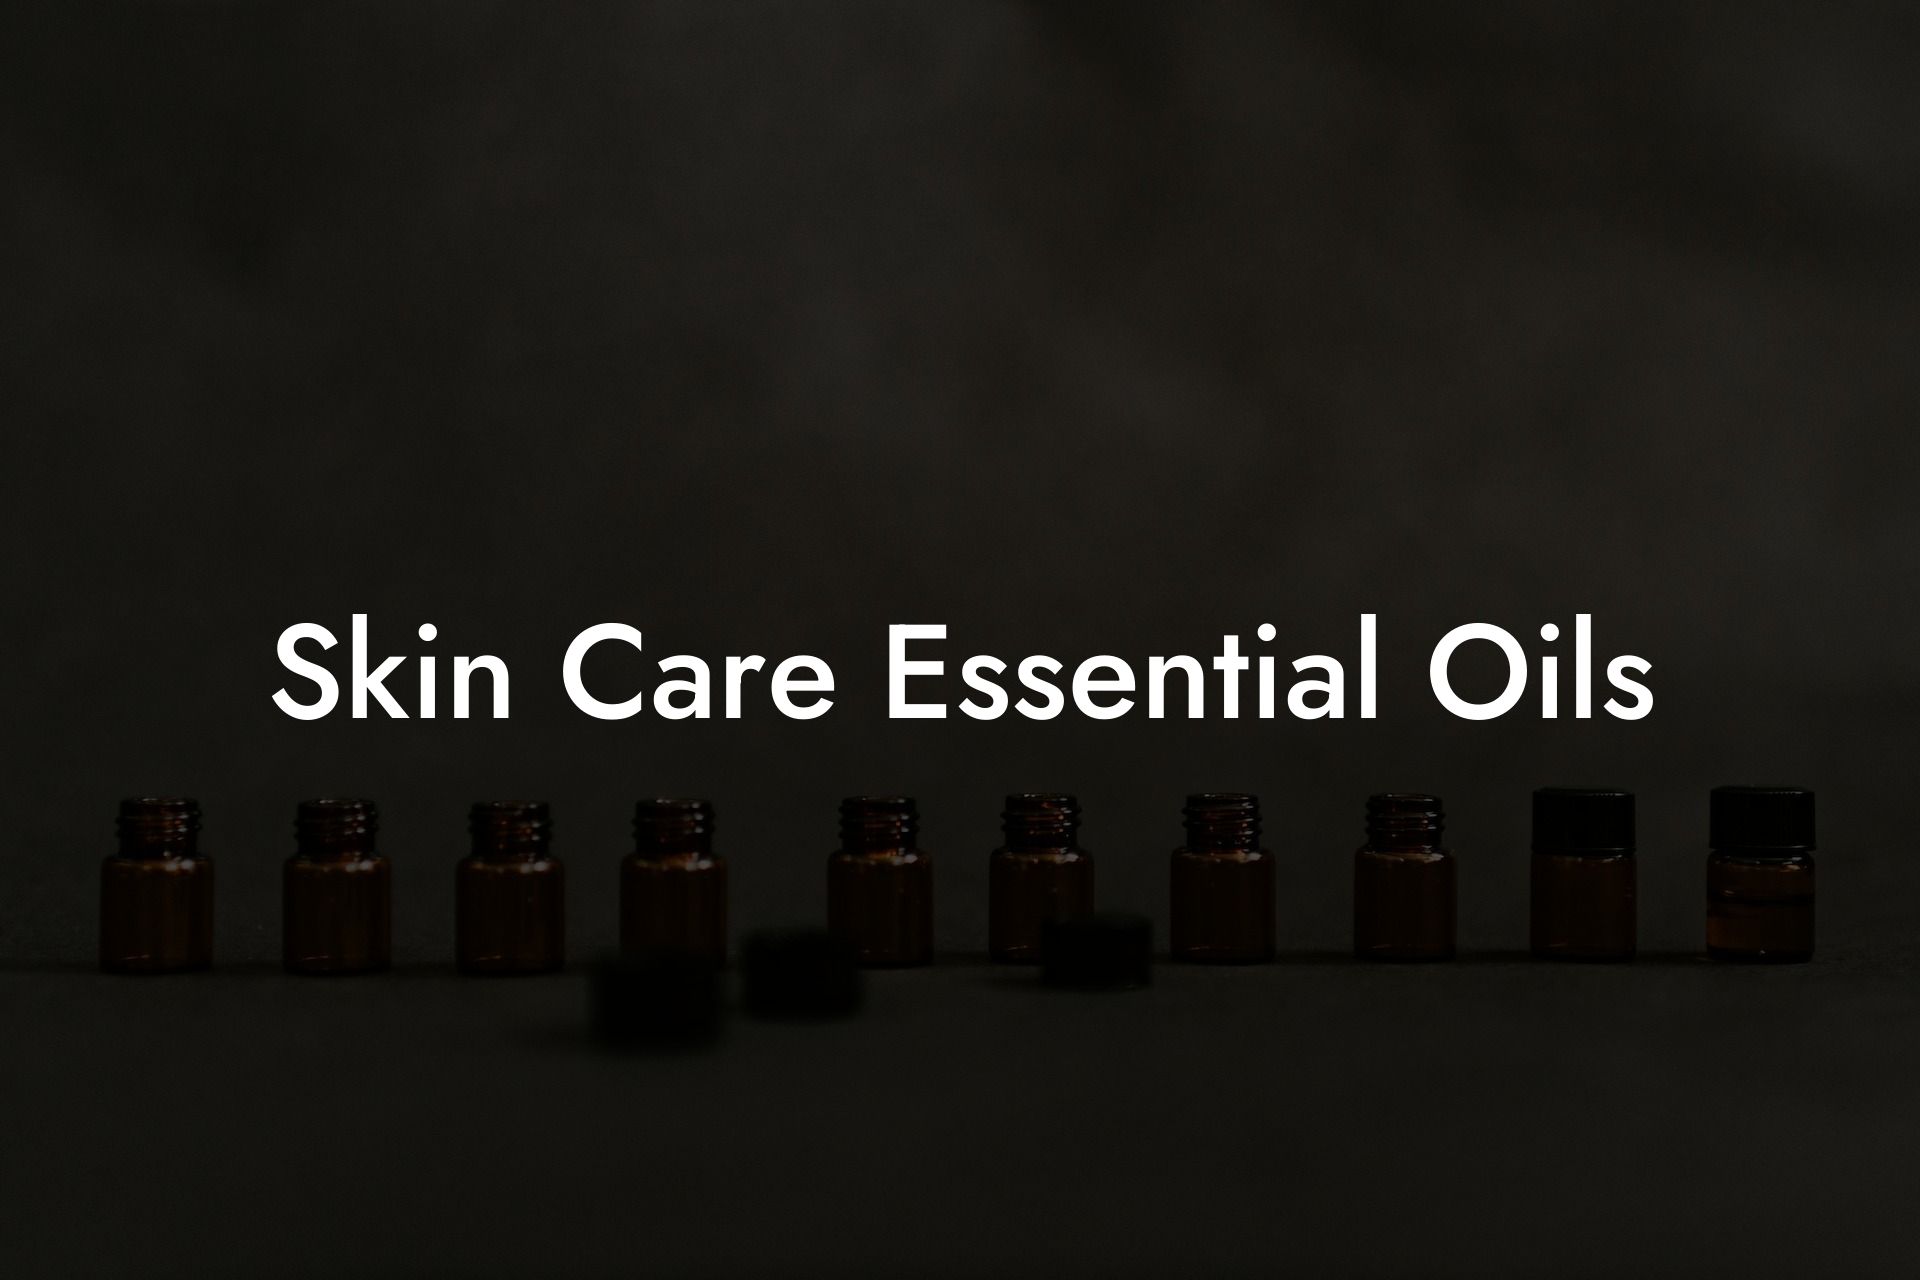 Skin Care Essential Oils